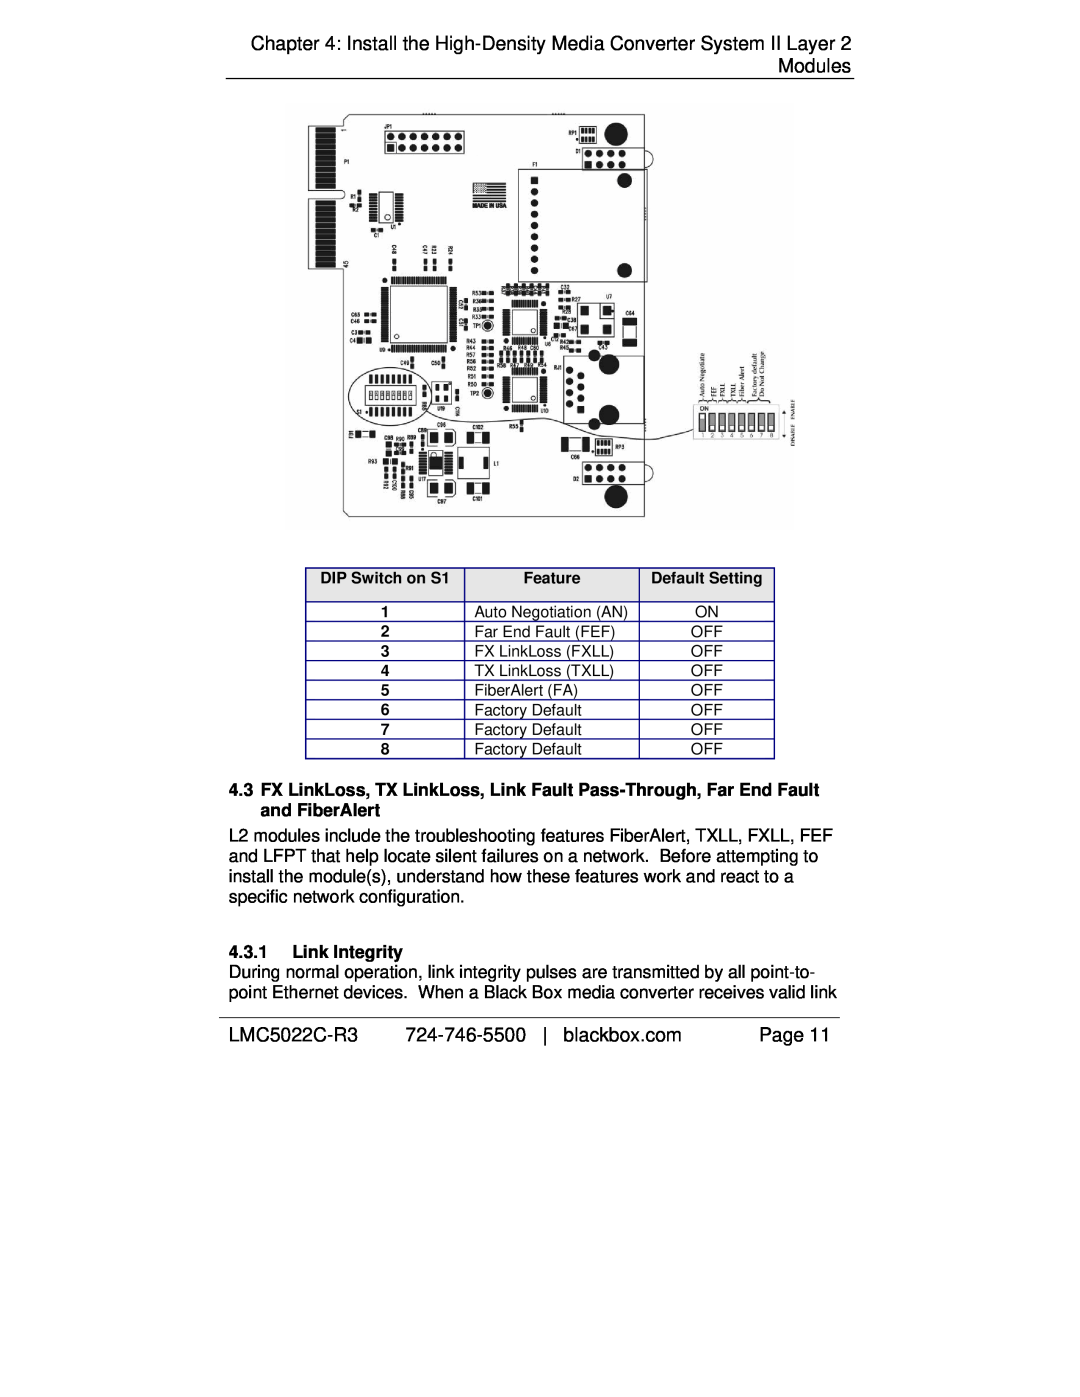 Black Box LMC5180C-R3, LMC5114C-R3, LMC5117C-R3 manual 4.3.1Link Integrity, LMC5022C-R3, 724-746-5500| blackbox.com, Page 